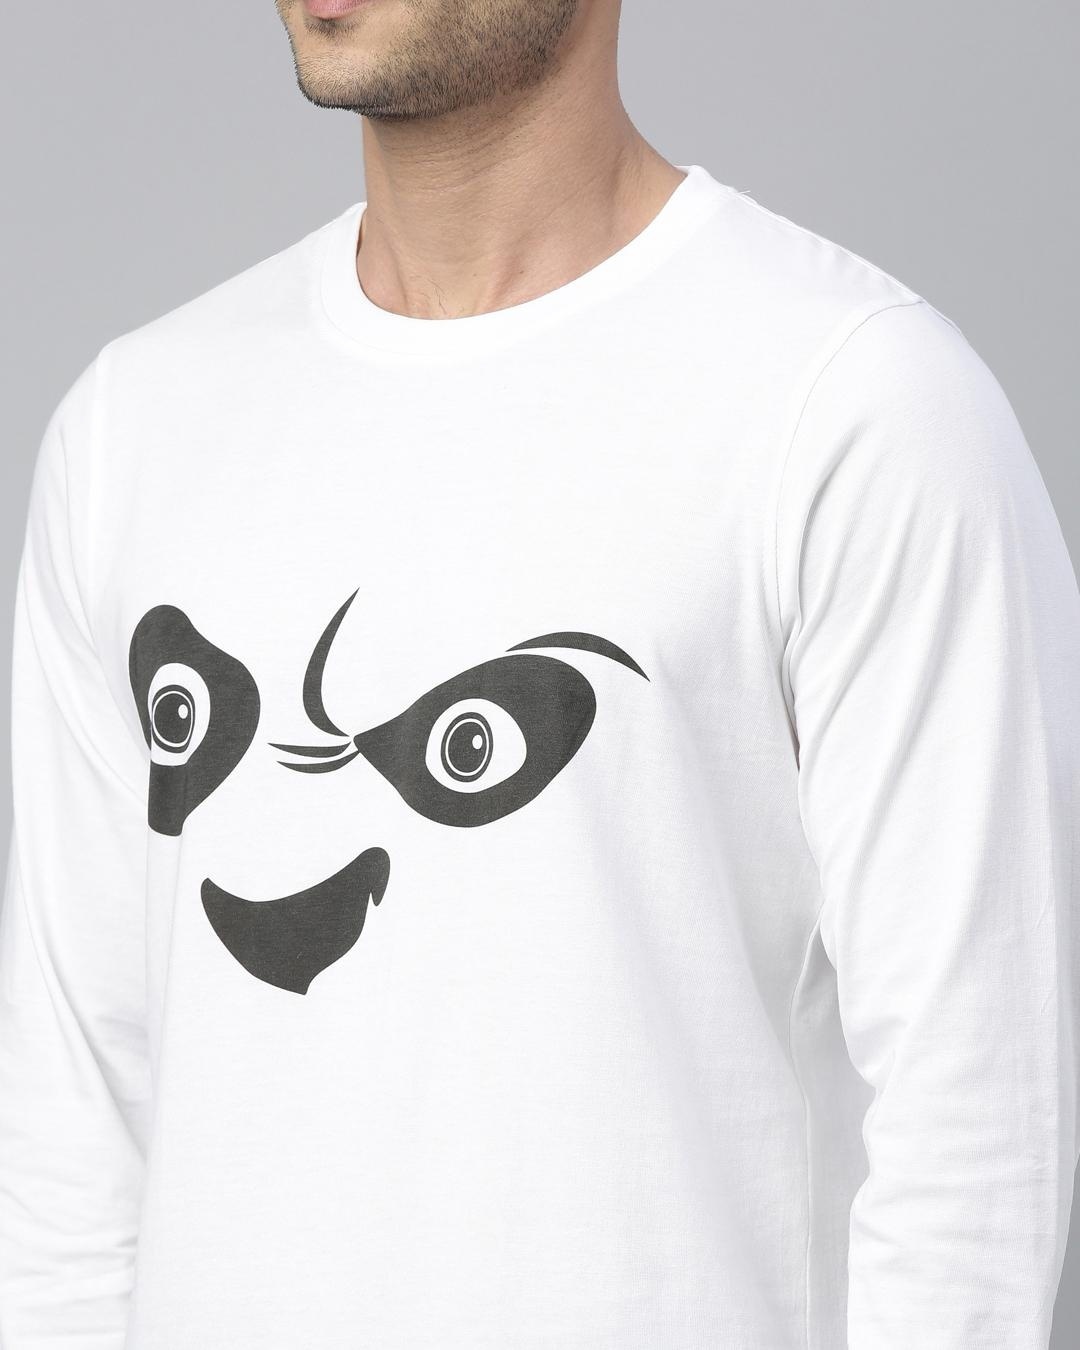 Buy Mens White Angry Panda Graphic Printed T Shirt For Men White Online At Bewakoof 